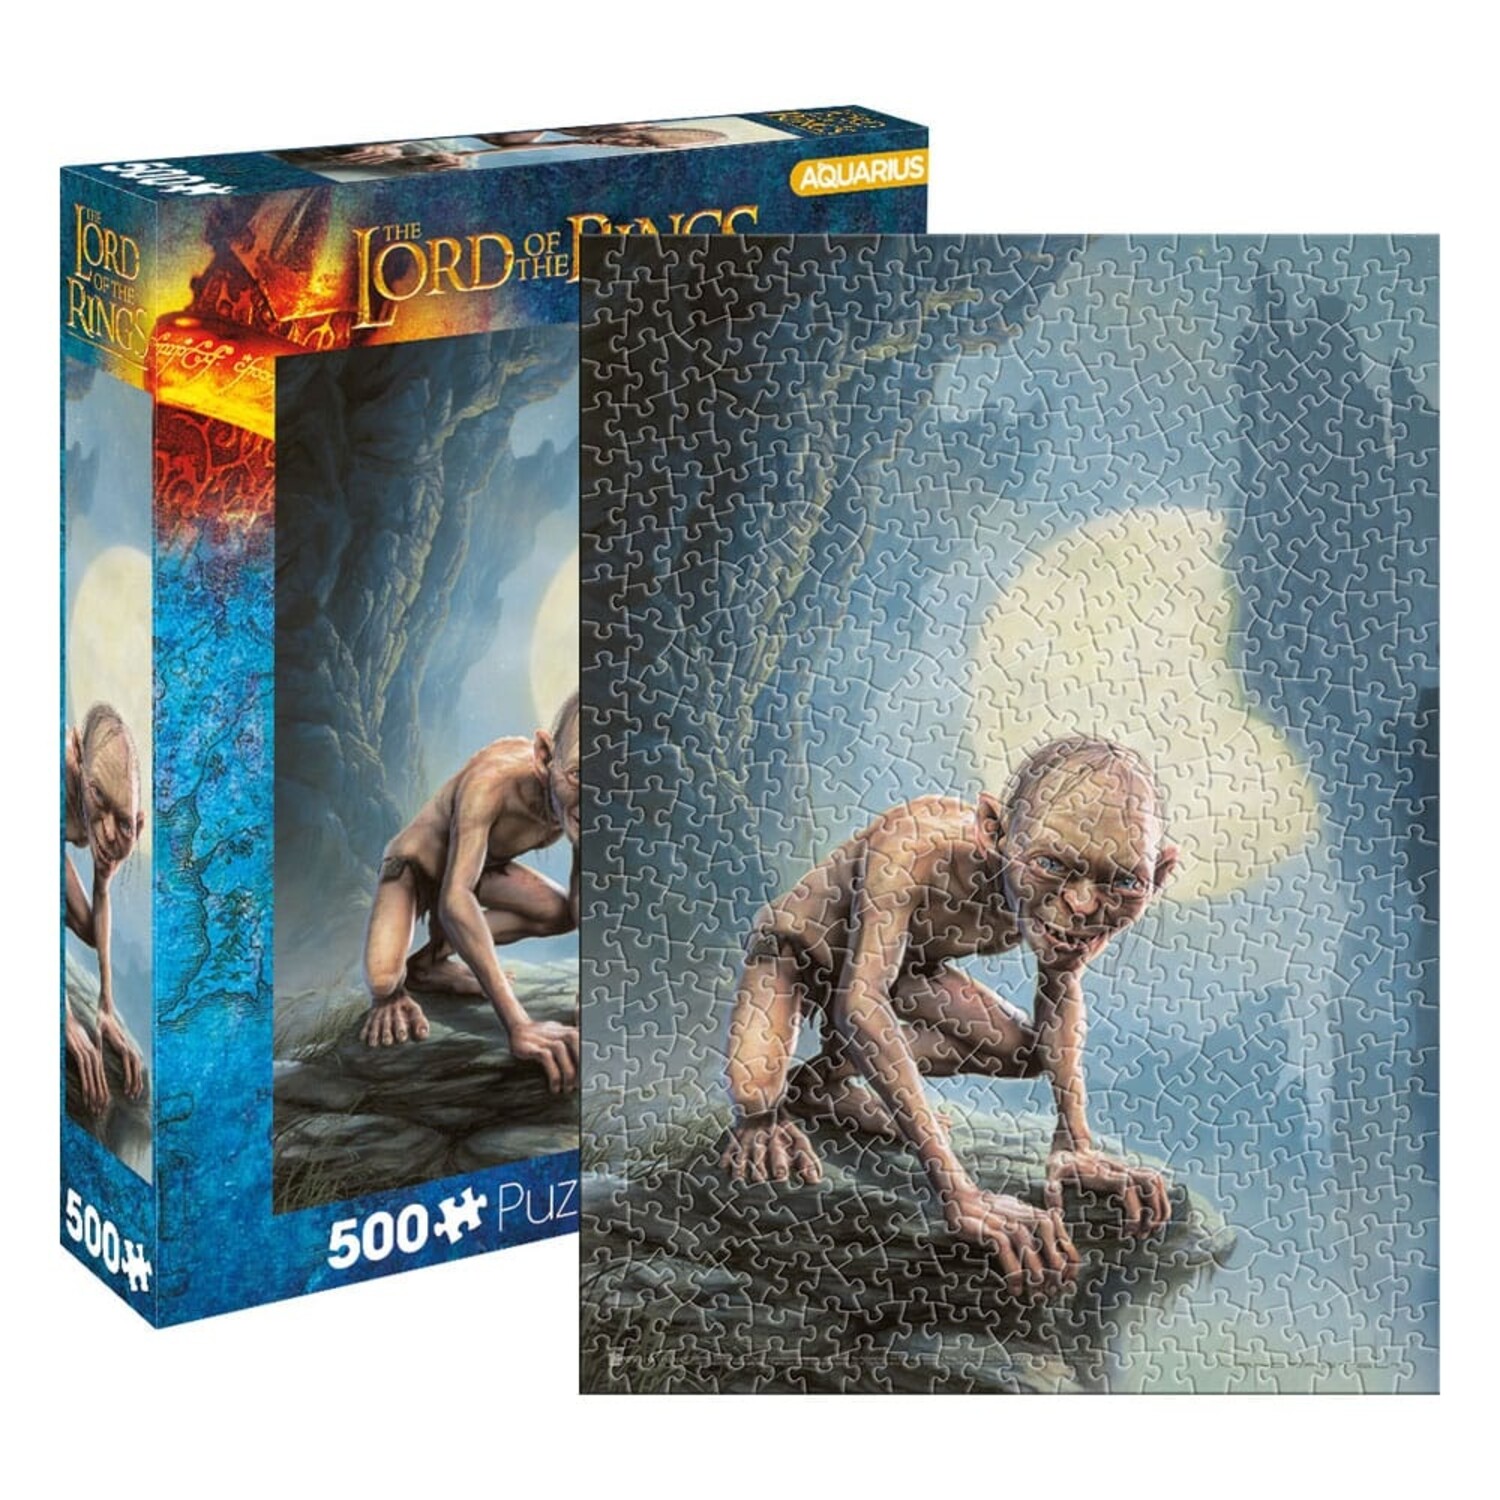 AQUARIUS Set of 3 Harry Potter Puzzles 500 Piece Jigsaw Puzzles